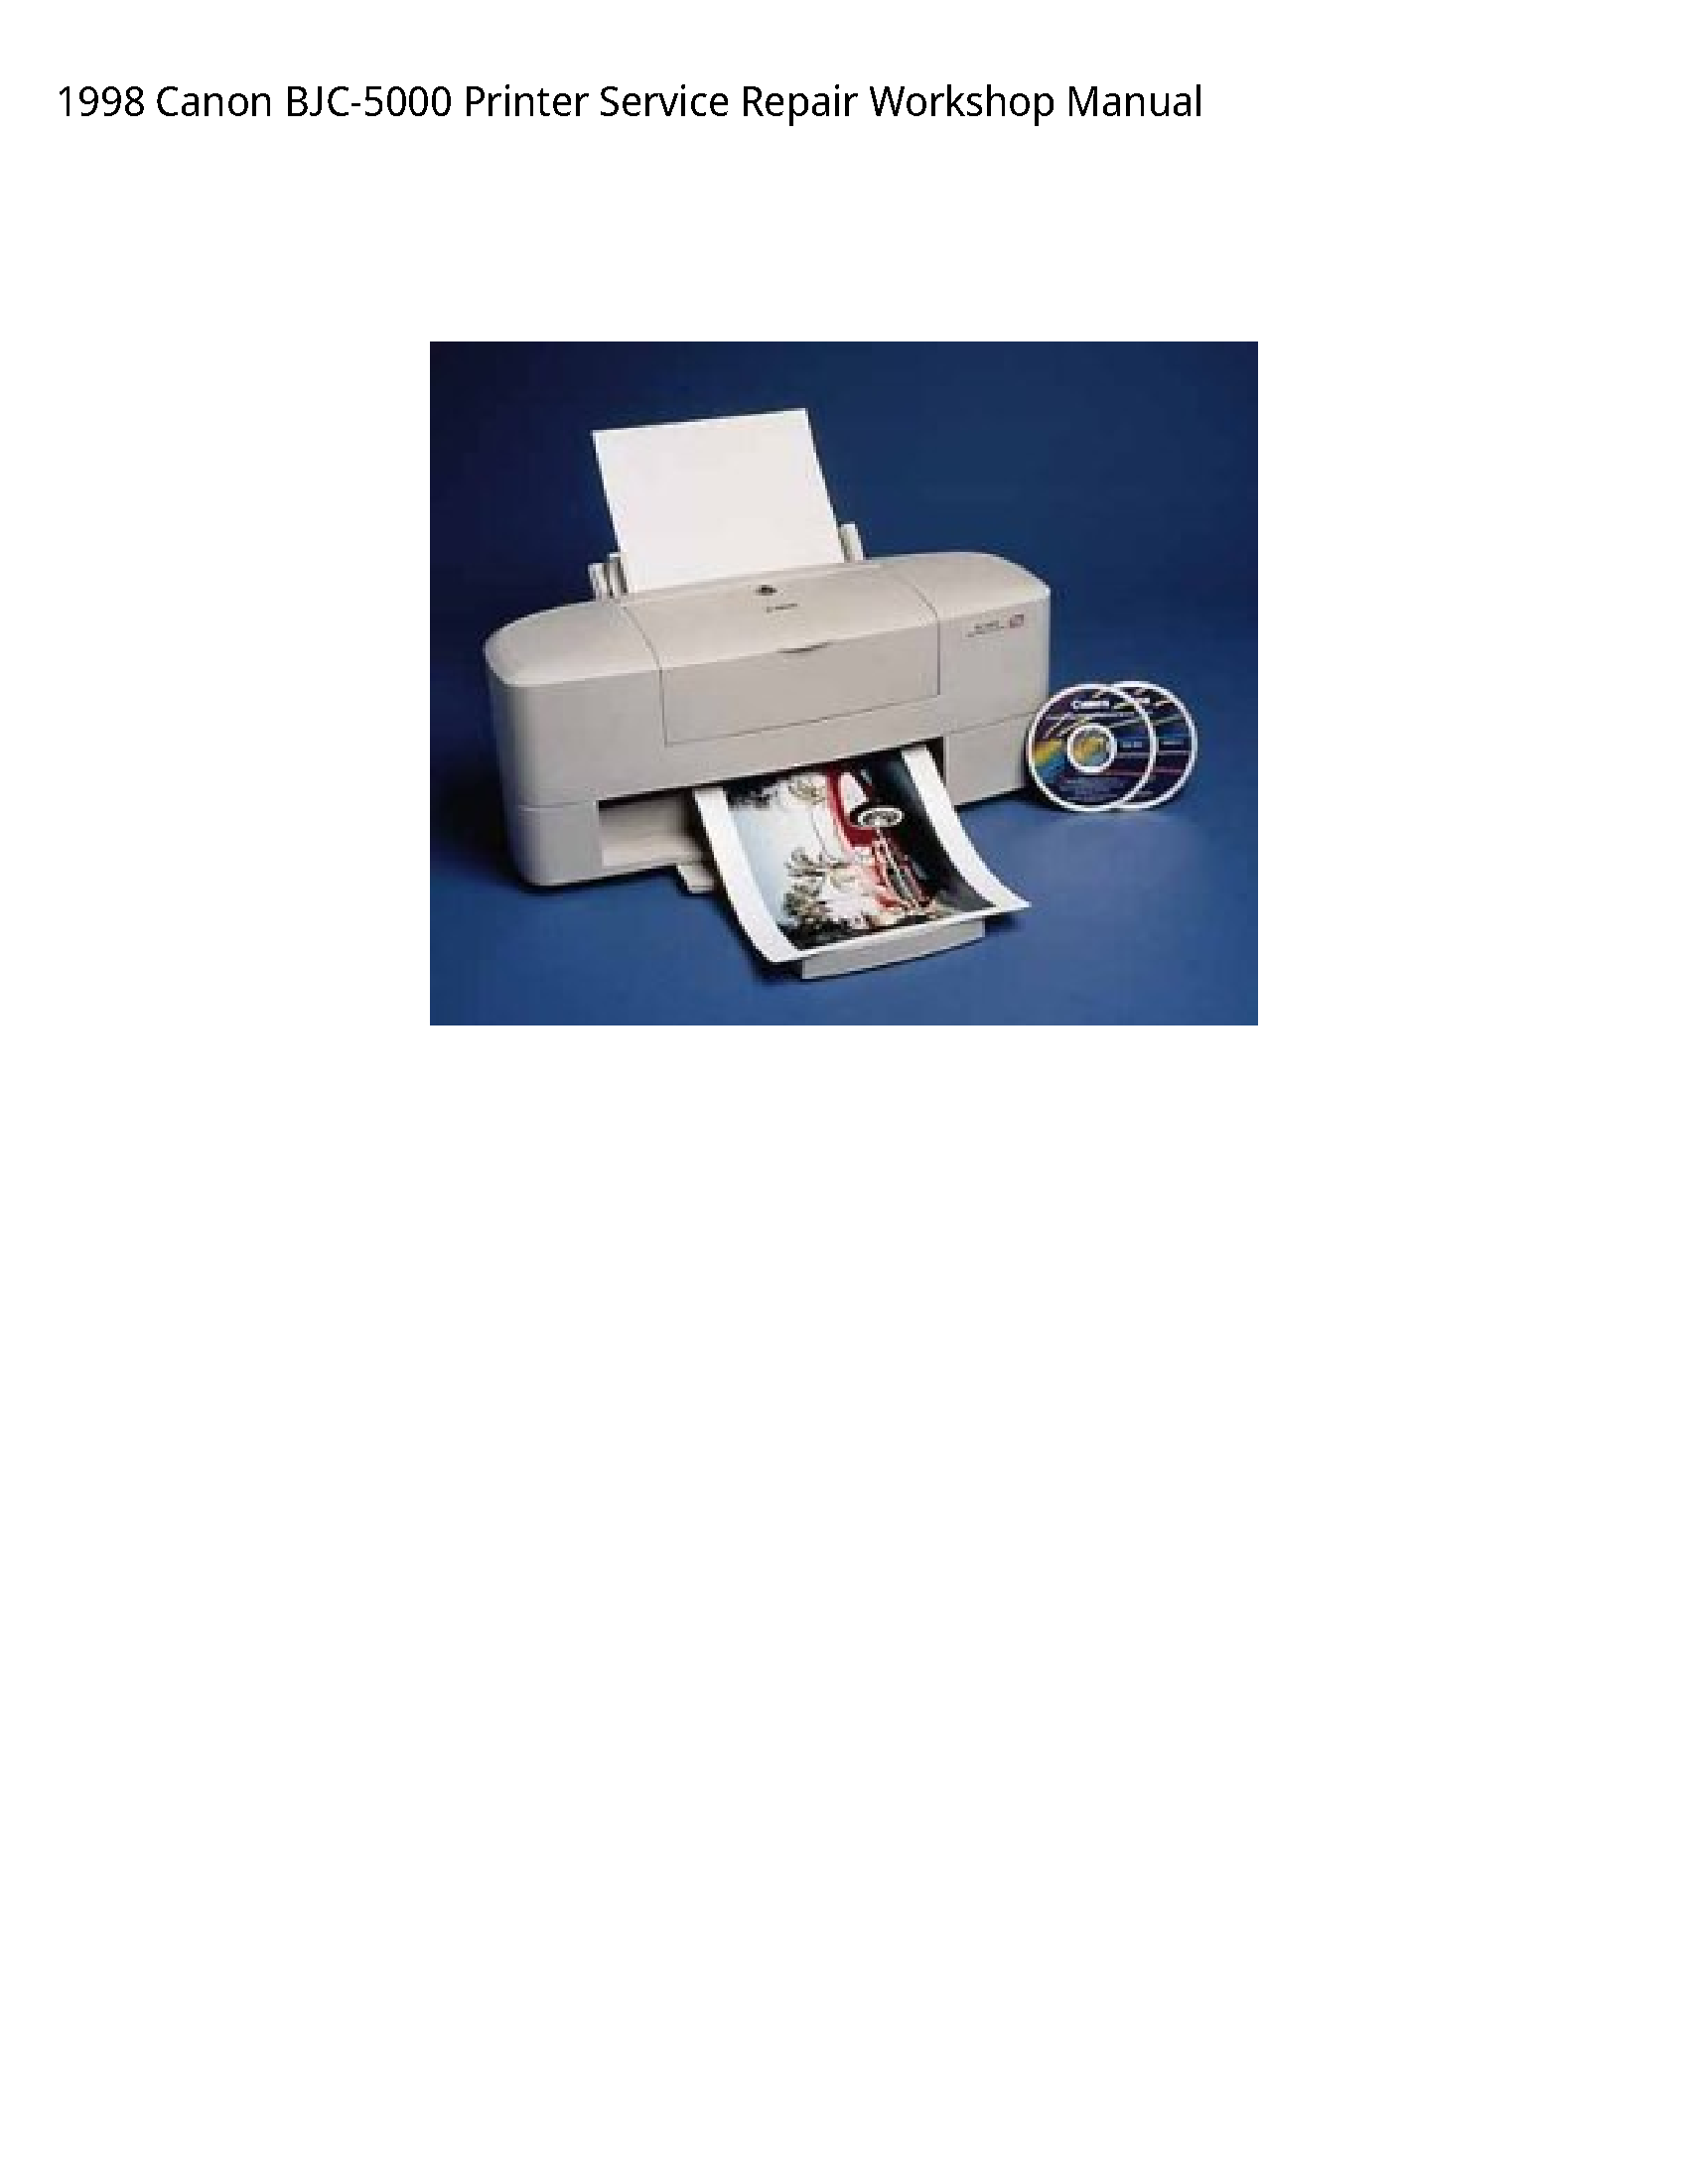 Canon BJC-5000 Printer manual